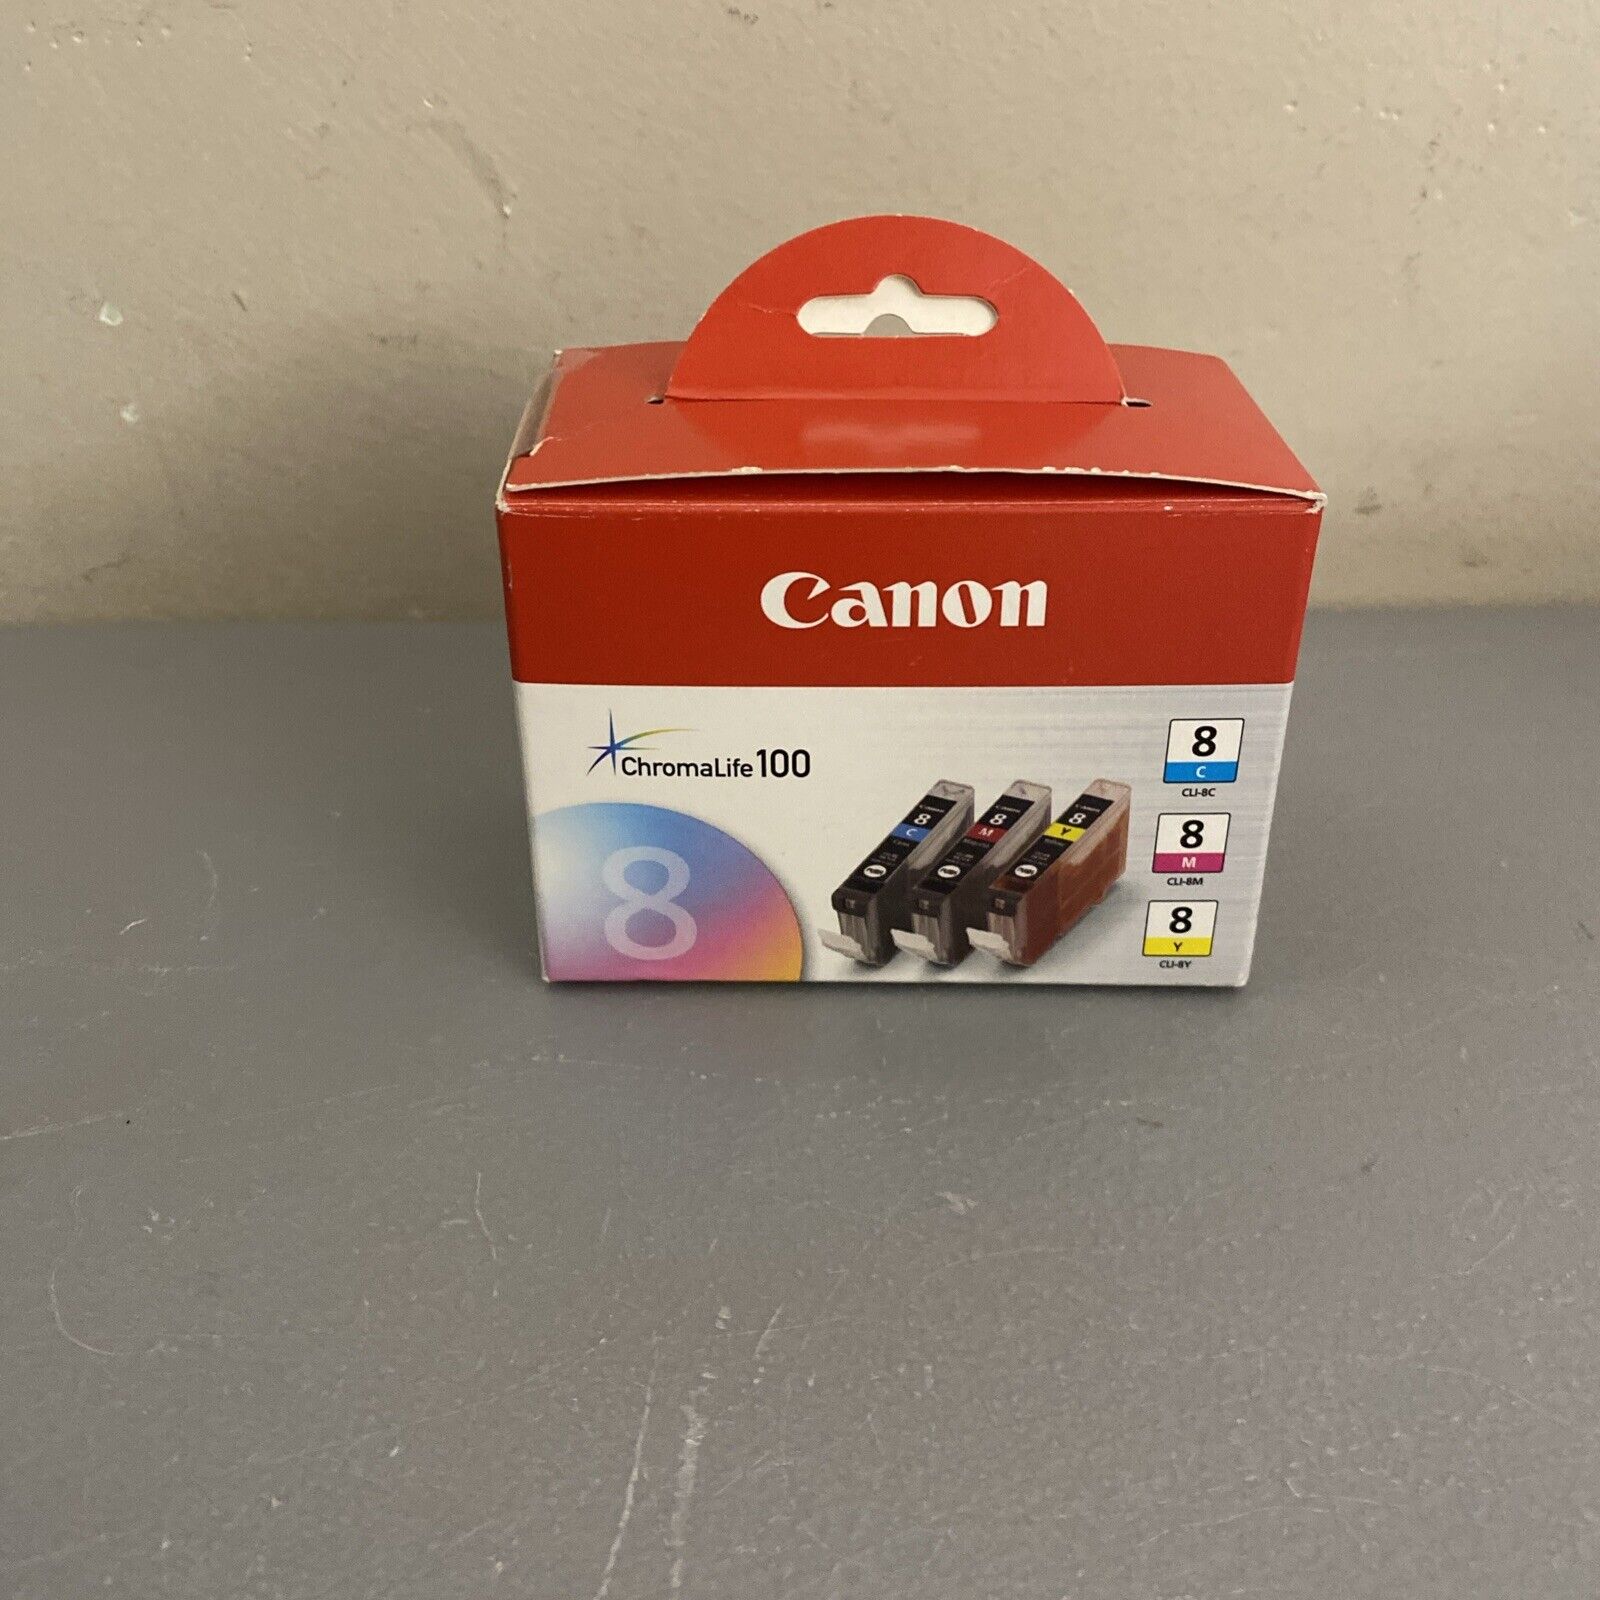 Canon Chromalife 100 3-Pack of CLI-8 Ink Tank Cartridges - Cyan Magenta Yellow